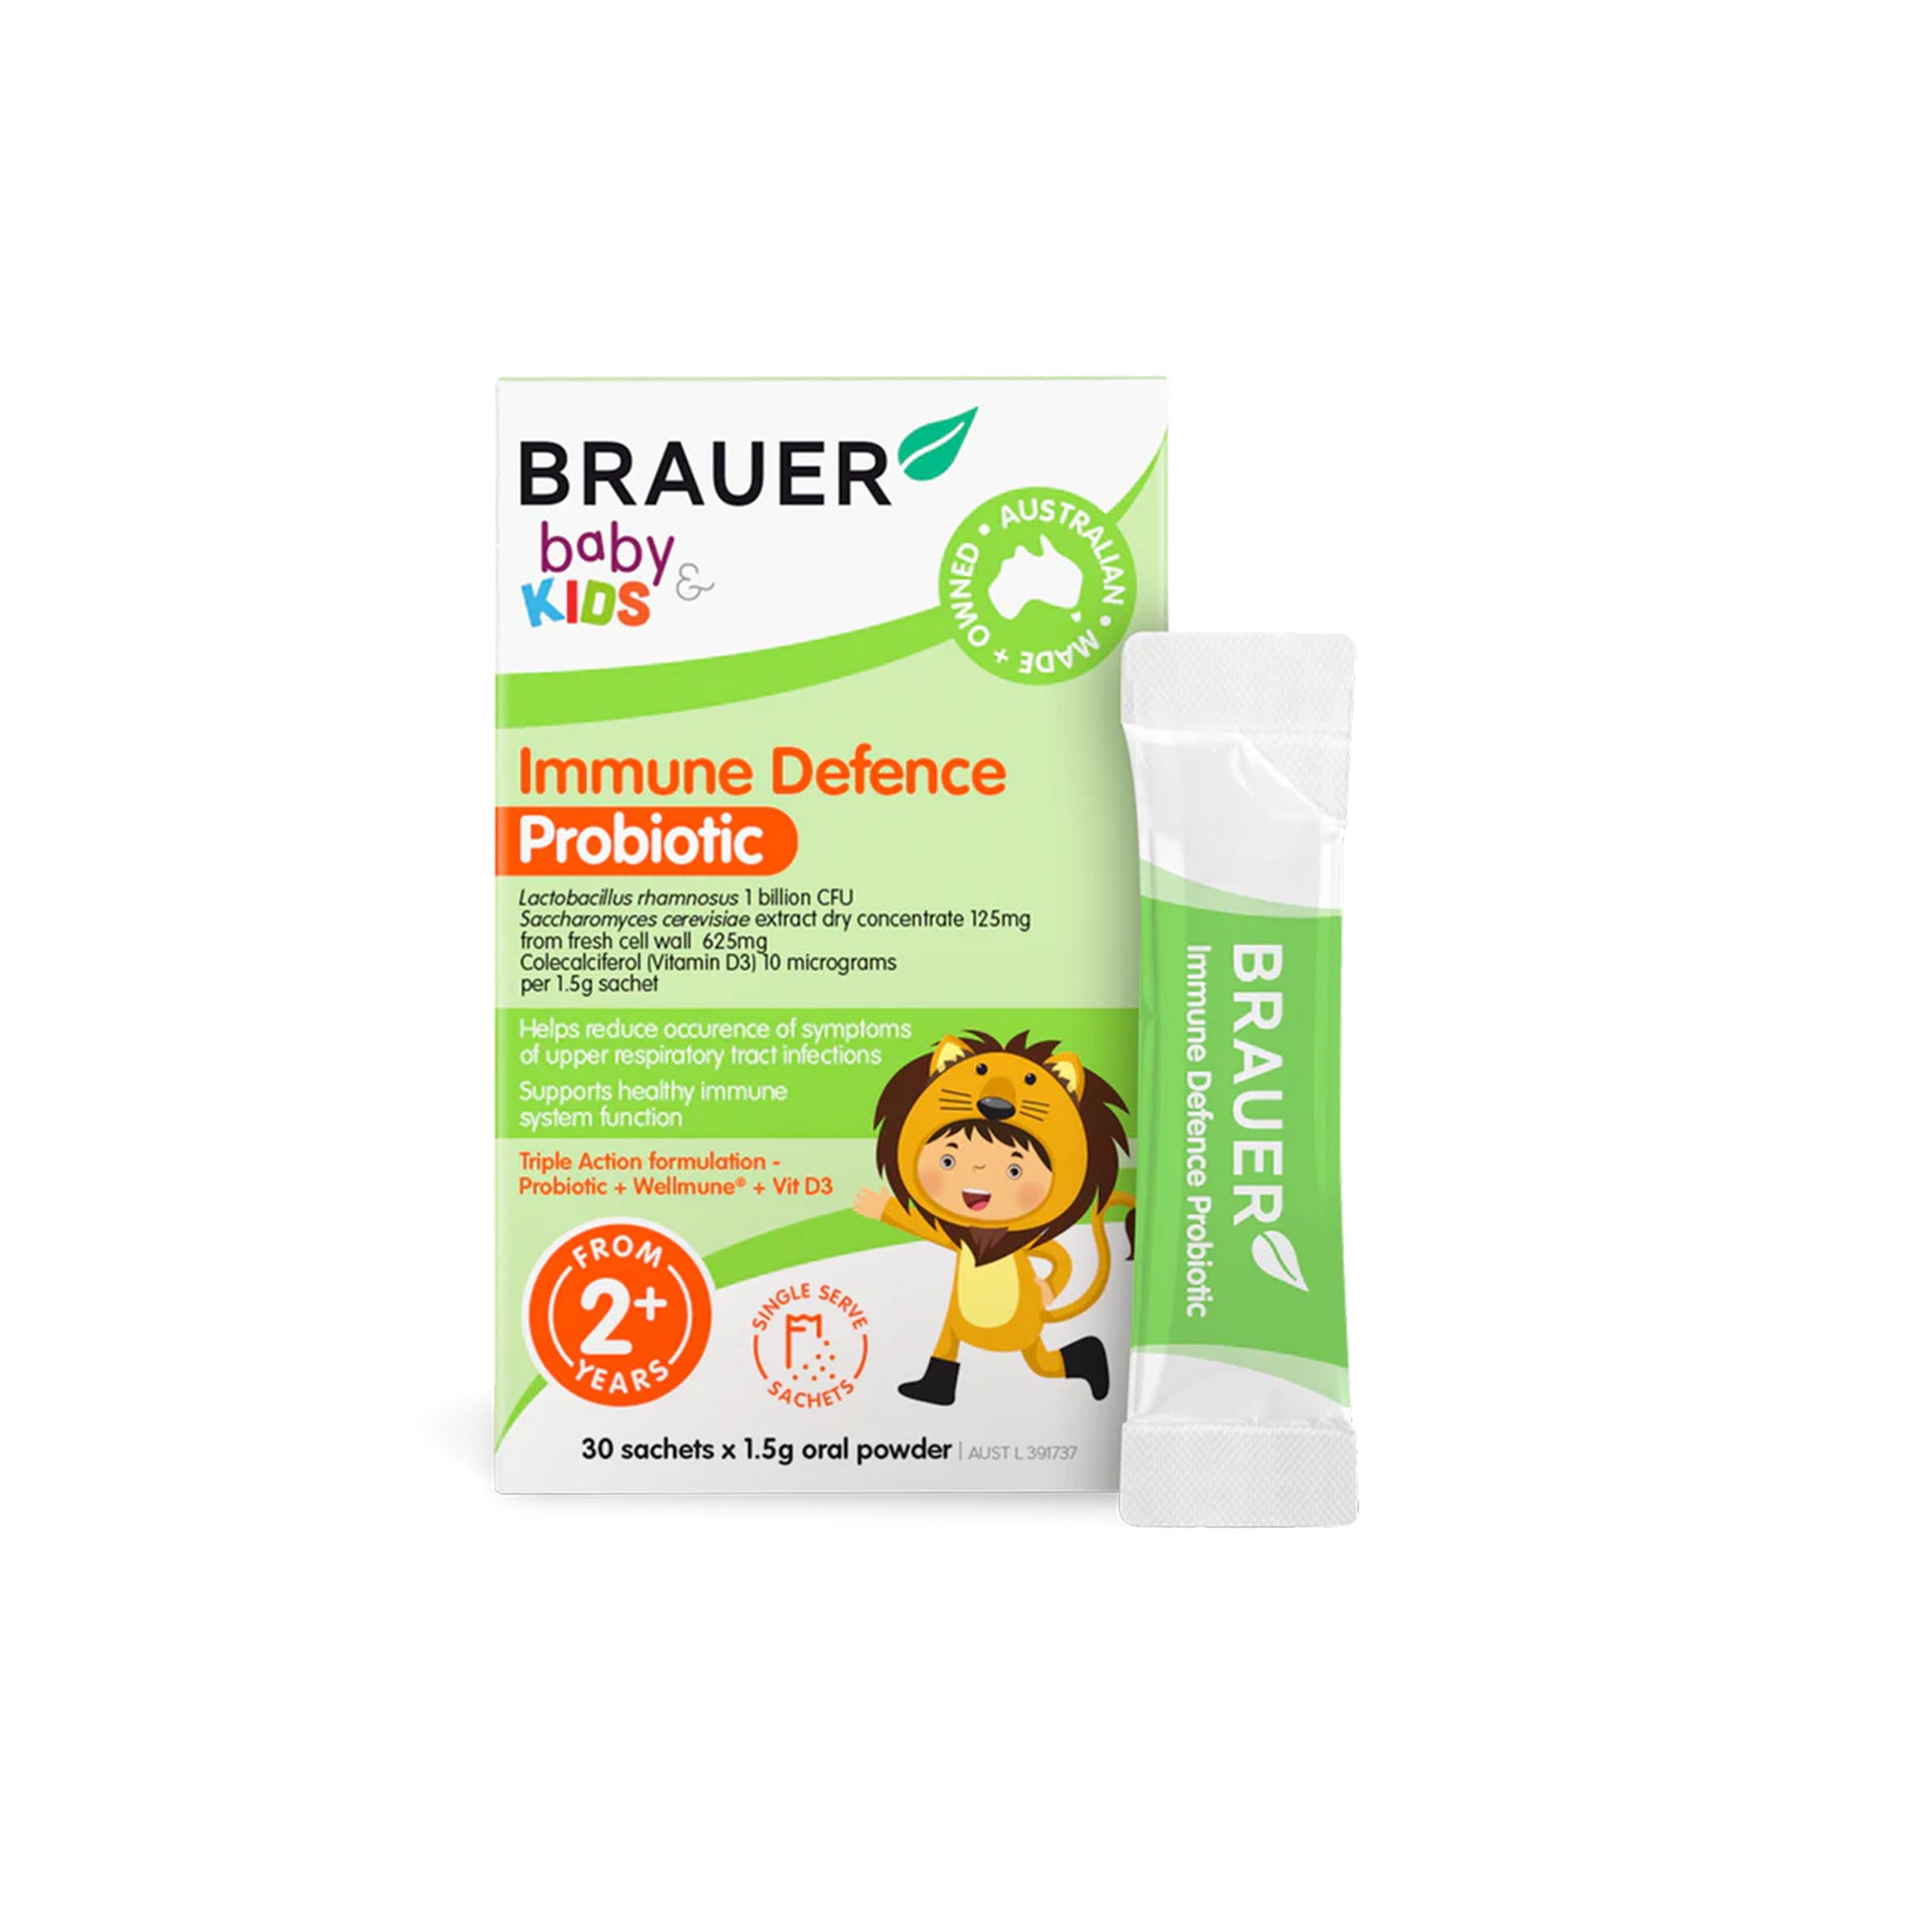 Immune Defence Probiotic - Brauer | MLC Space